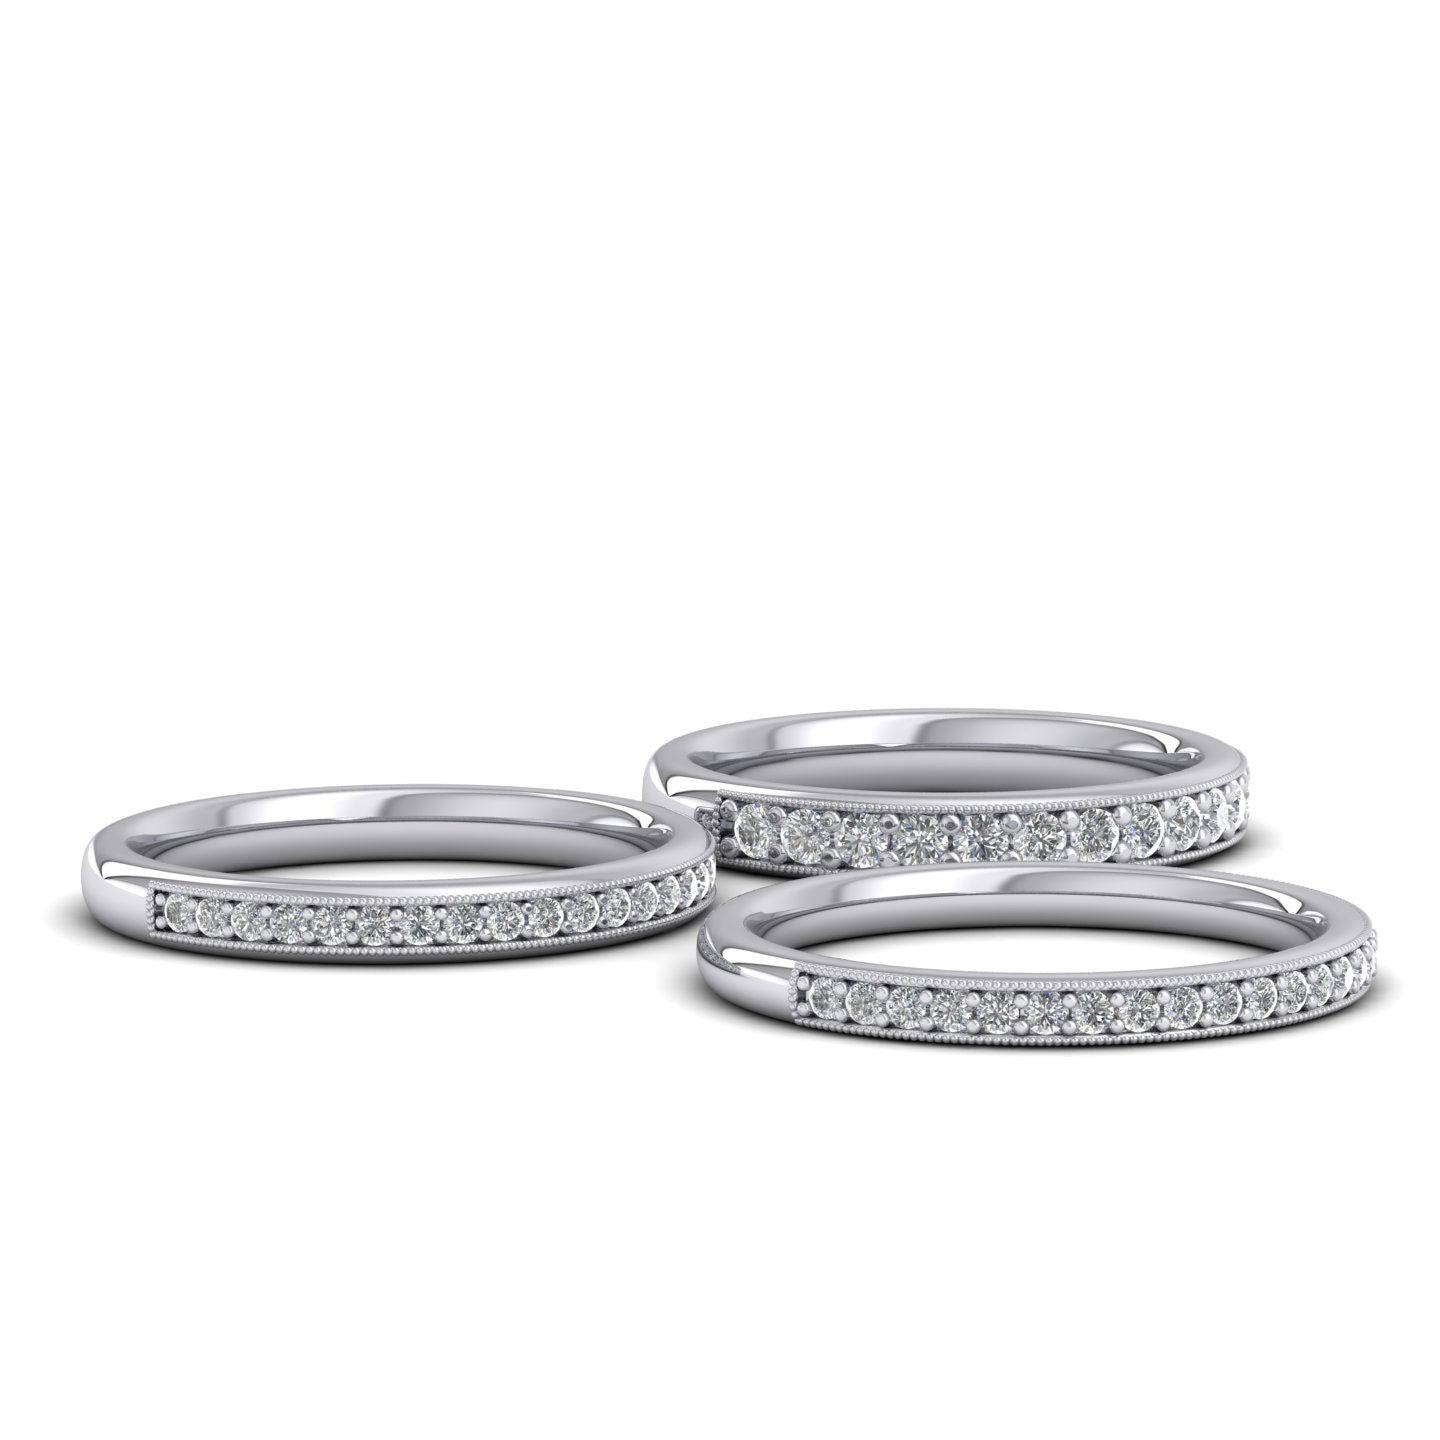 Half Bead Set 0.23ct Round Brilliant Cut Diamond With Millgrain Surround 950 Platinum 2mm Wedding Ring